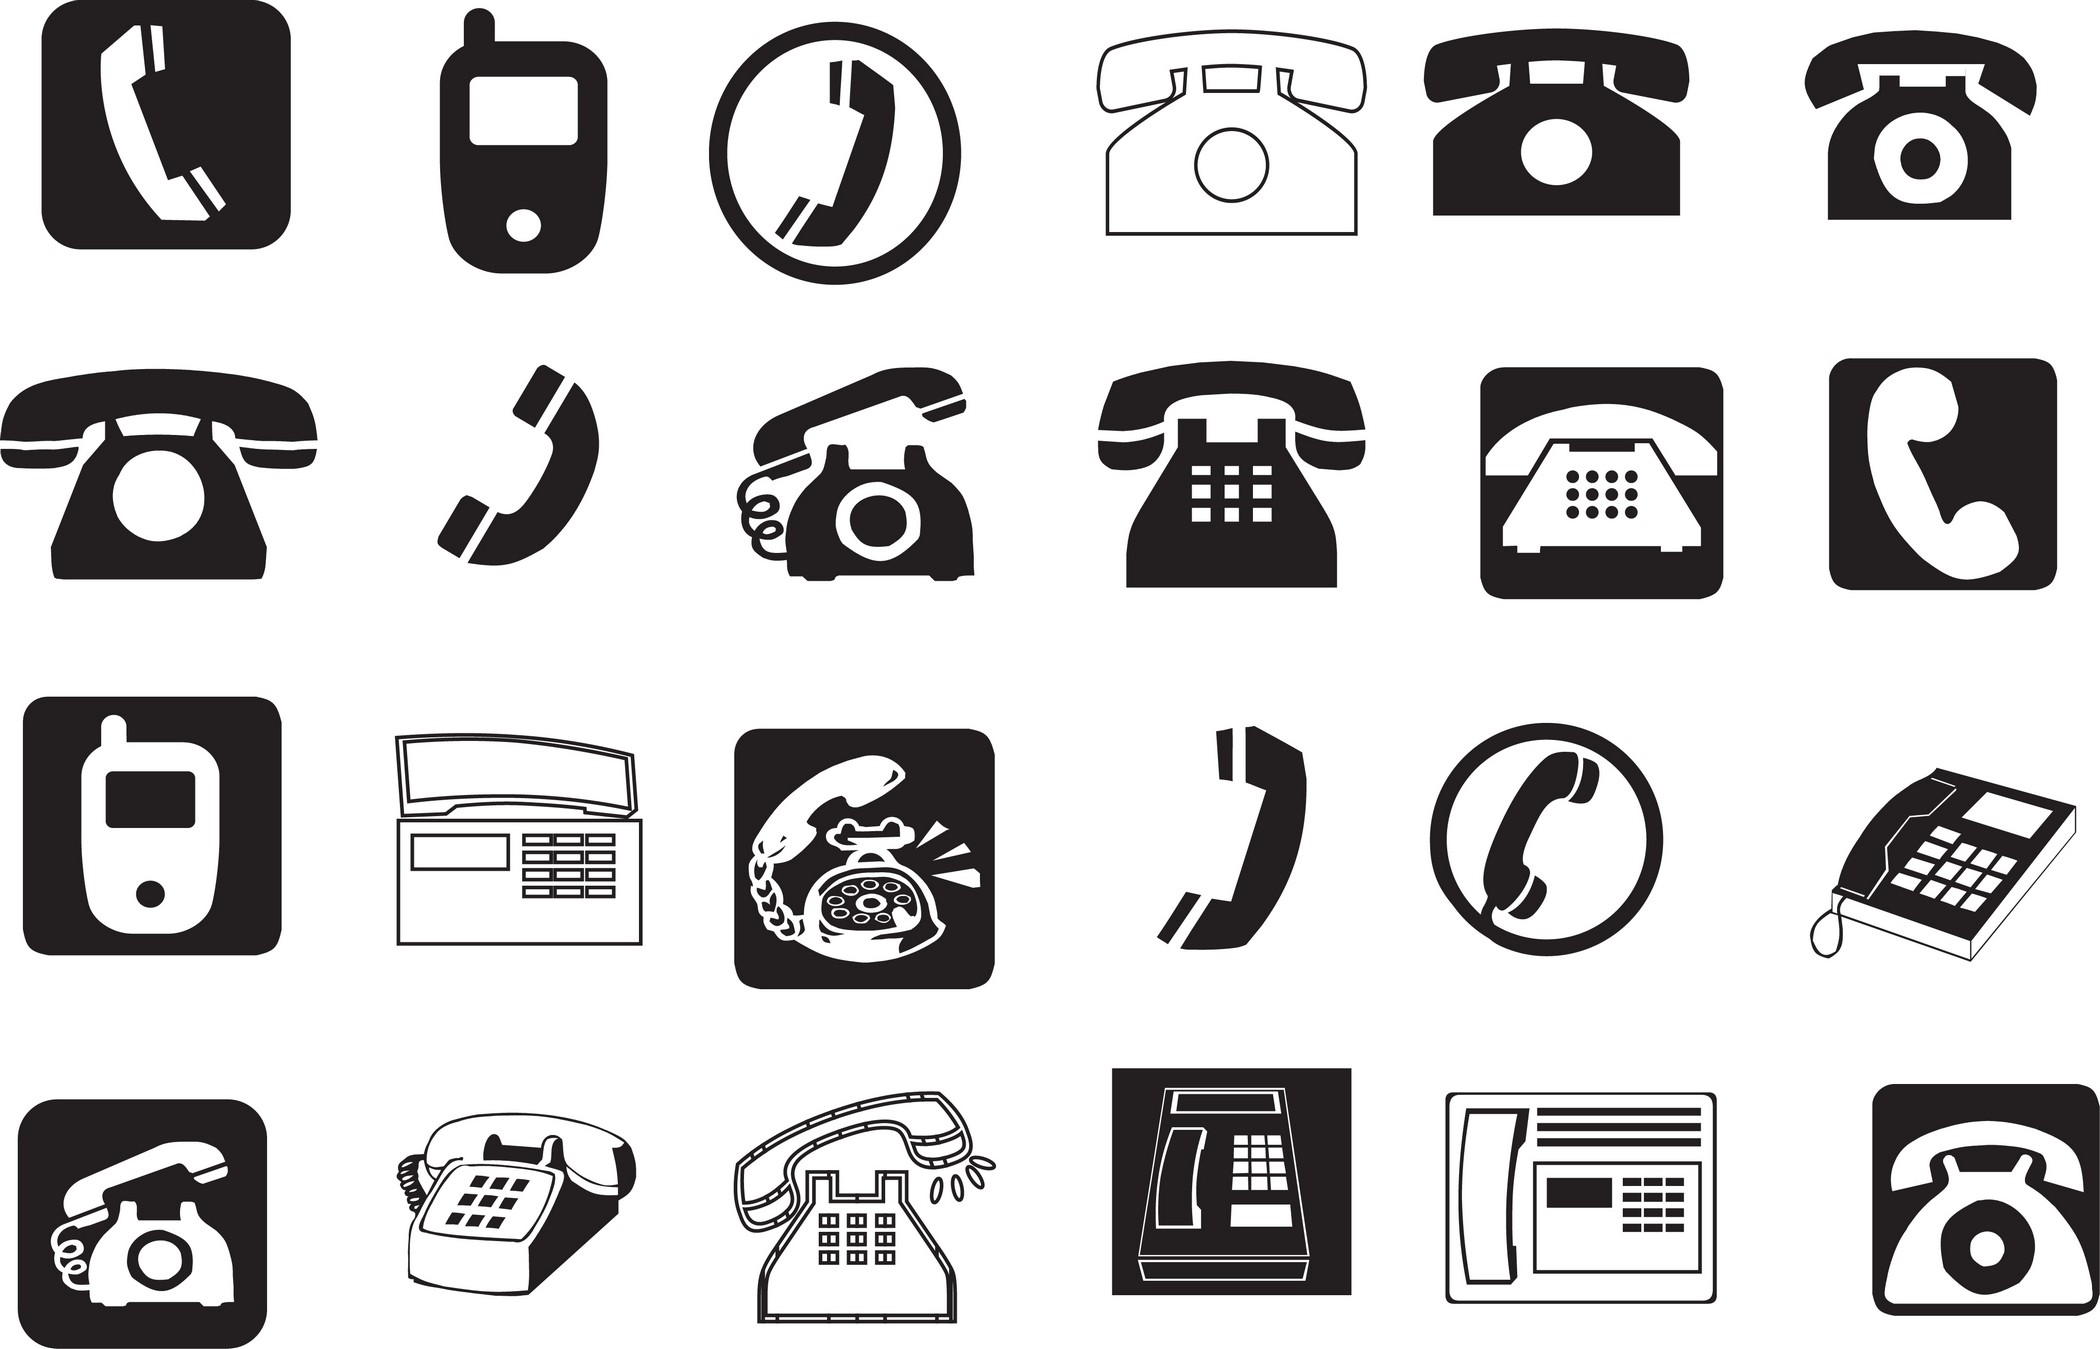 Telephone symbol, Shopping Symbols, Business Card Symbol Vector 